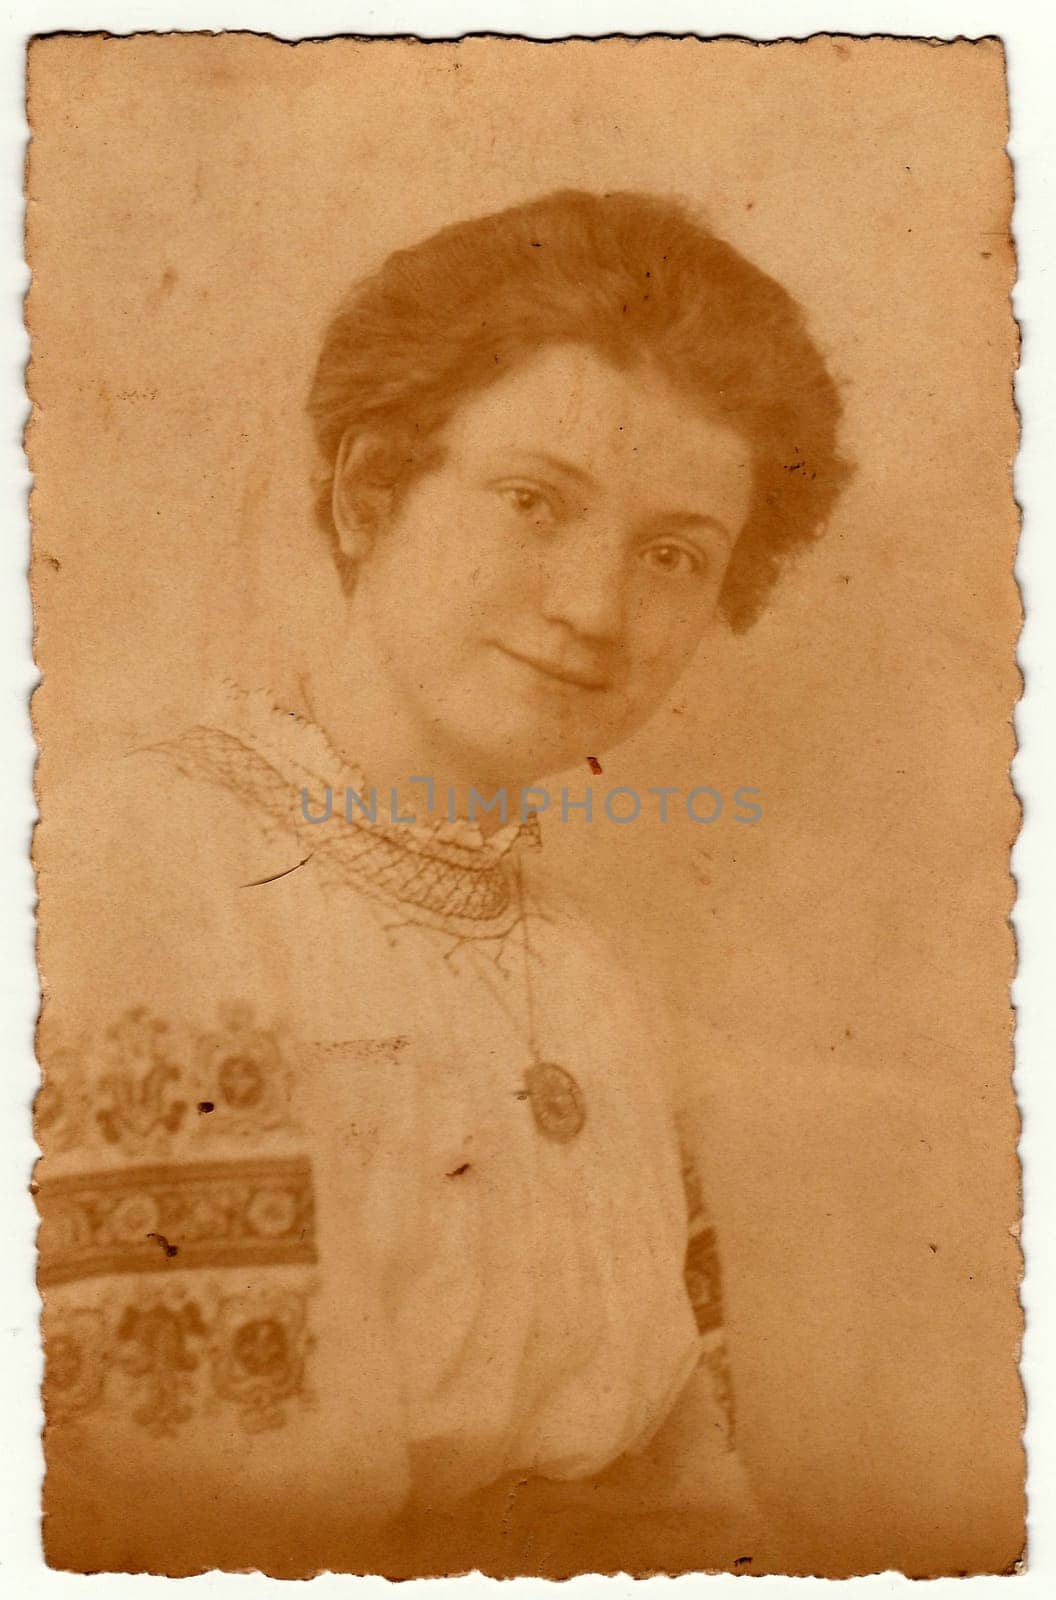 JENA, GERMANY - CIRCA 1920s: Vintage photo shows young woman wears a folk blouse with floral pattern (Sunday best dress). Antique black white studio portrait.